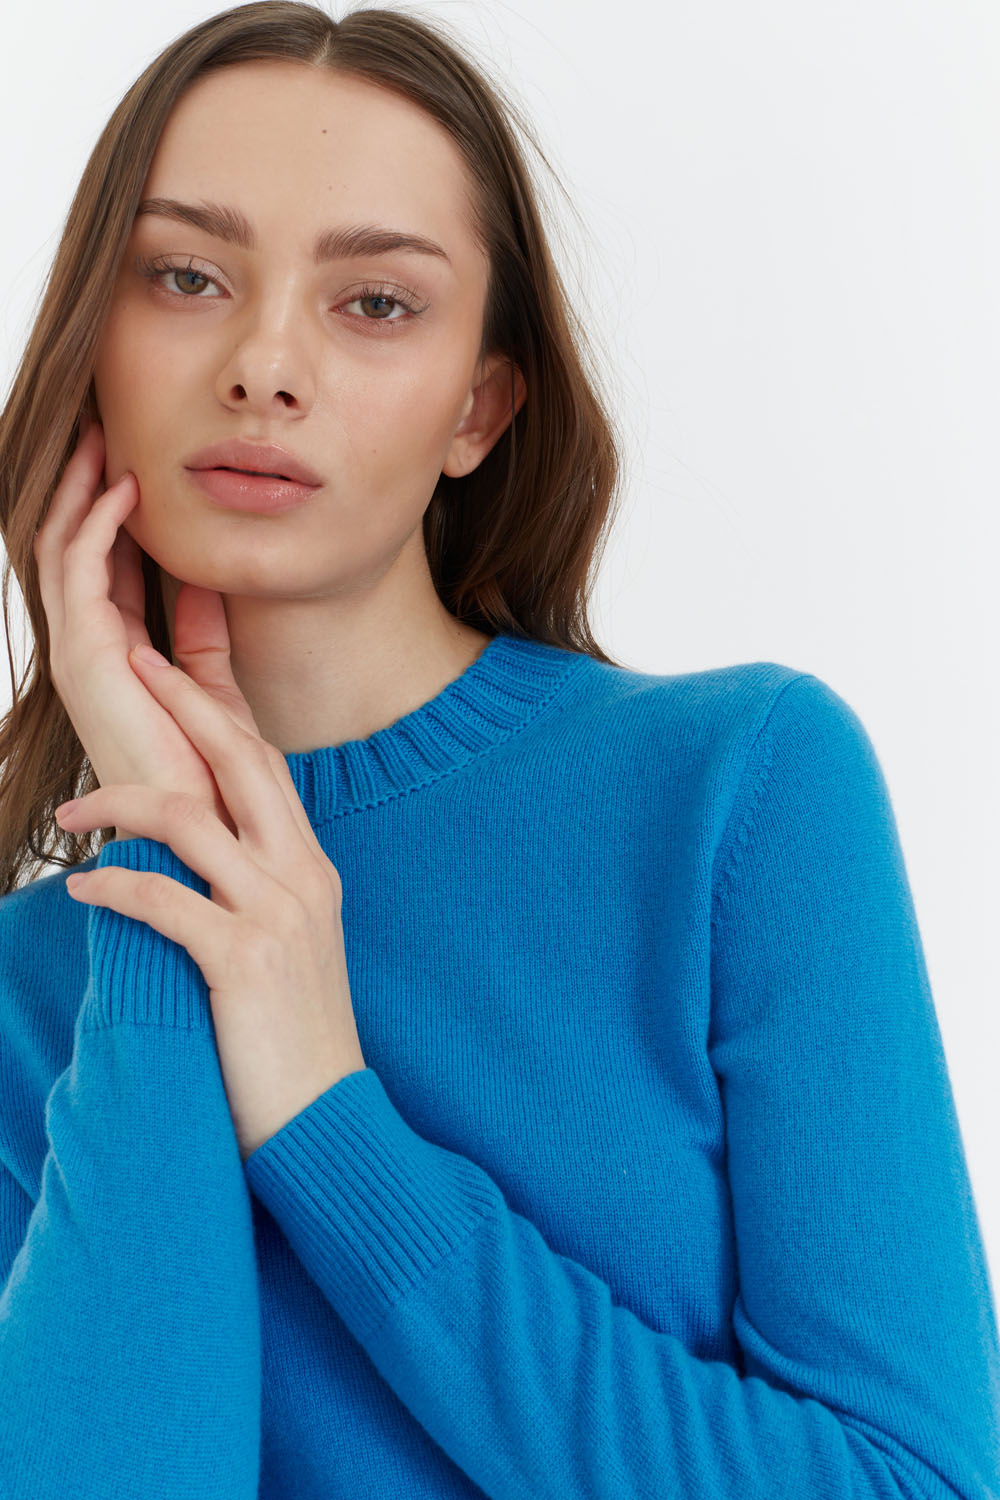 Denim-Blue Wool-Cashmere Cropped Sweater